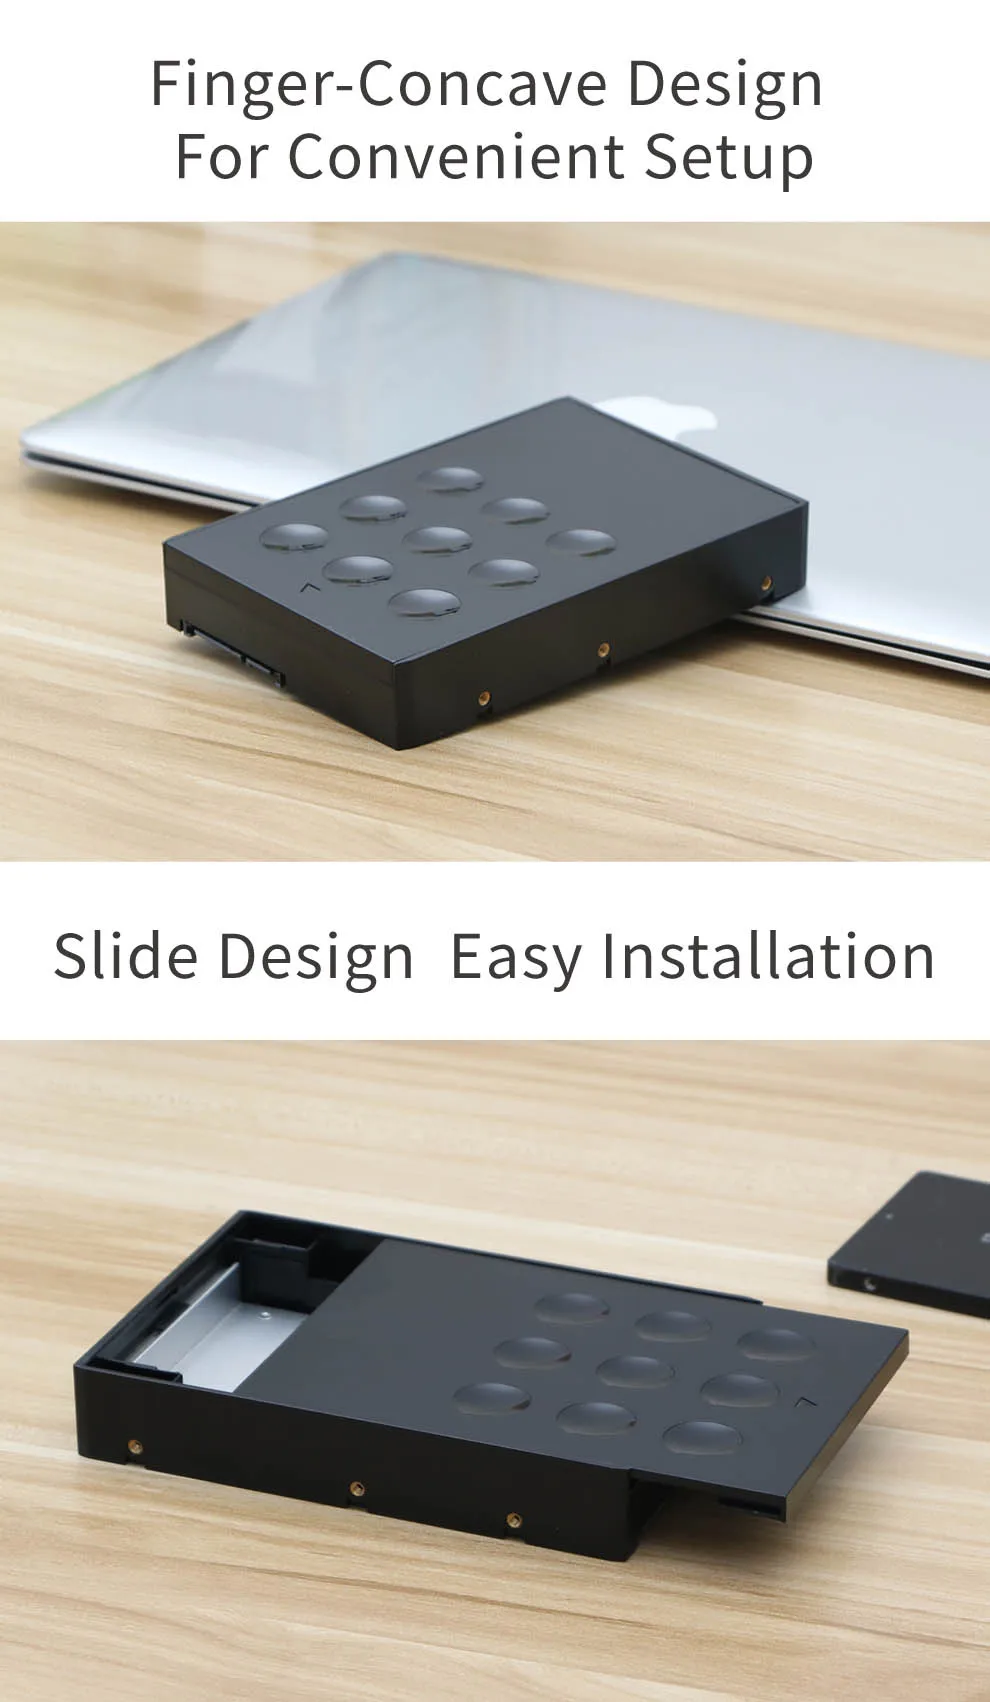 Ineo без инструментов SATA HDD Монтажный адаптер кронштейн для 2,5 дюймов до 3,5 дюймов SATA SSD жесткий диск конвертер [2549]